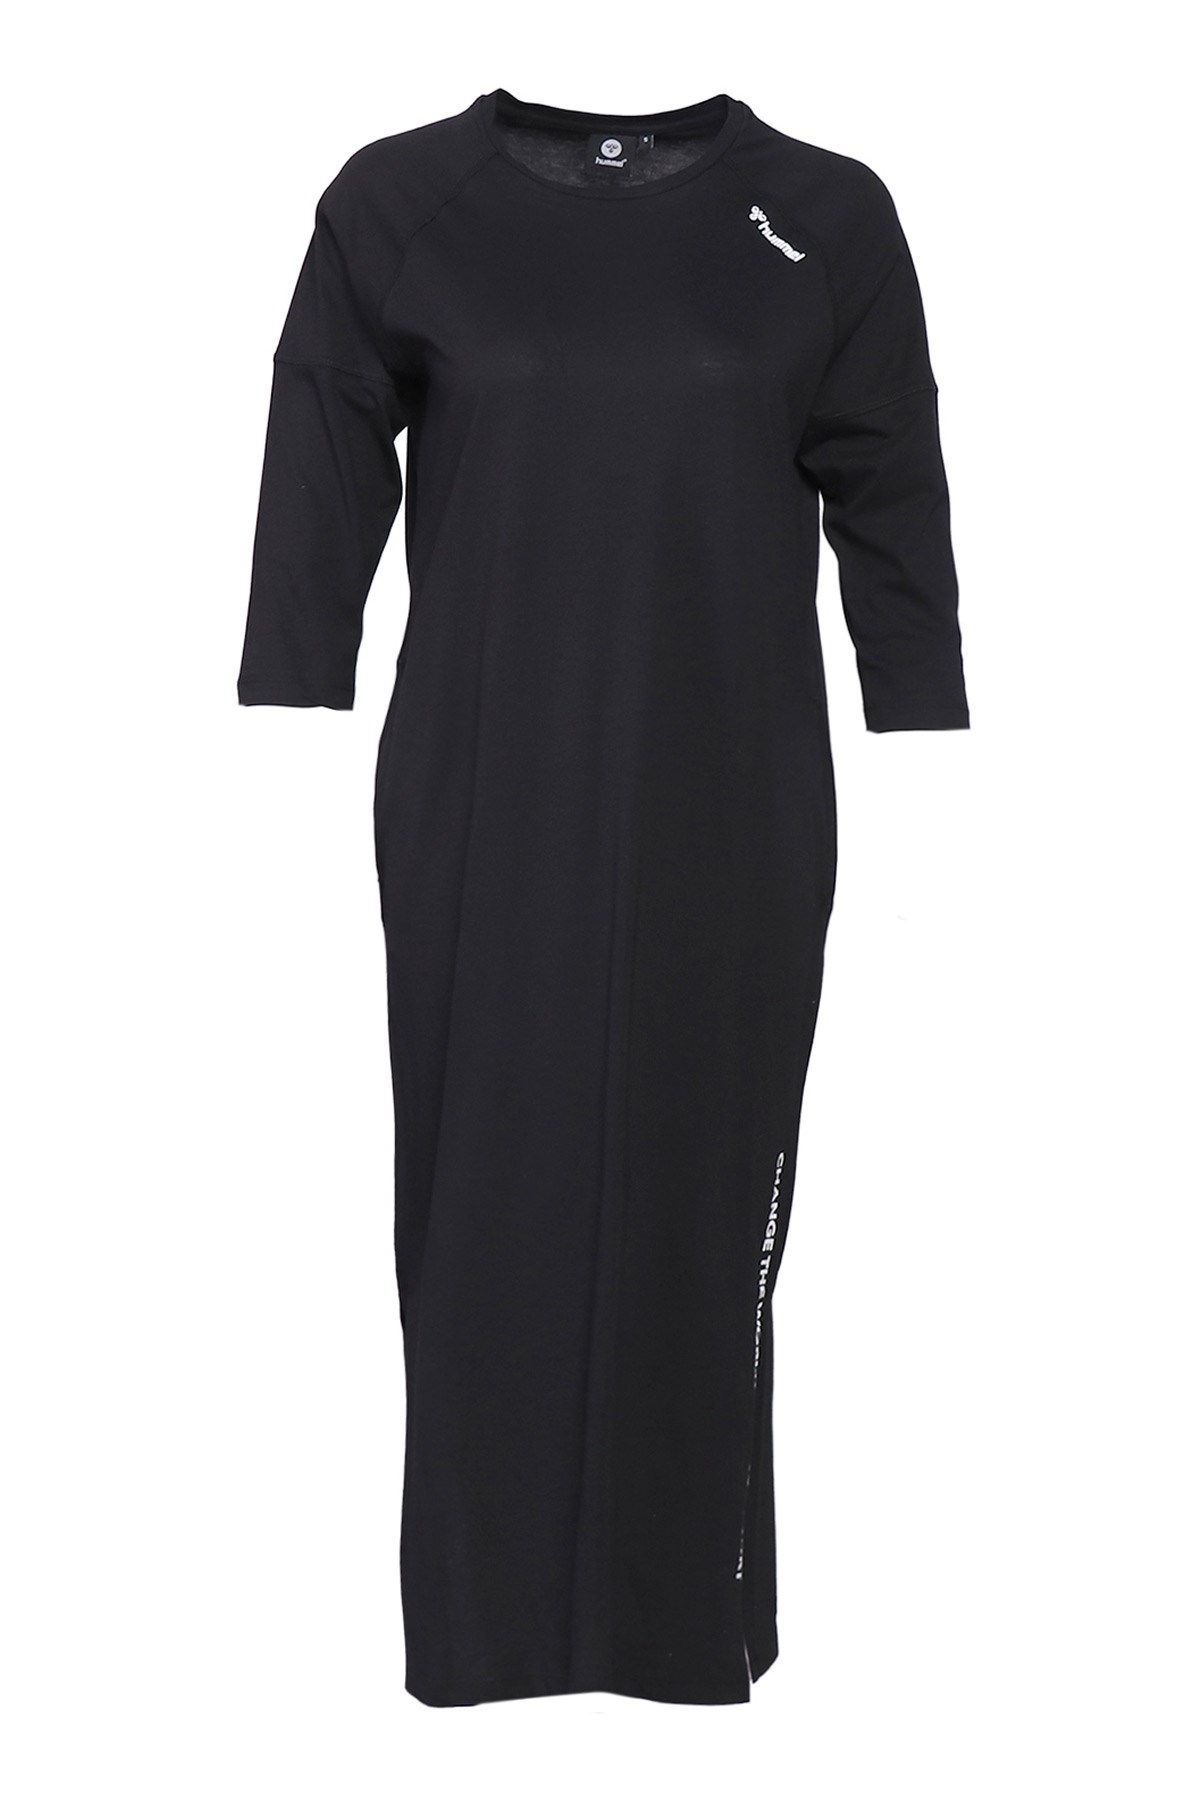 Hummel yenga Dress Kadın Elbise 960015-2001